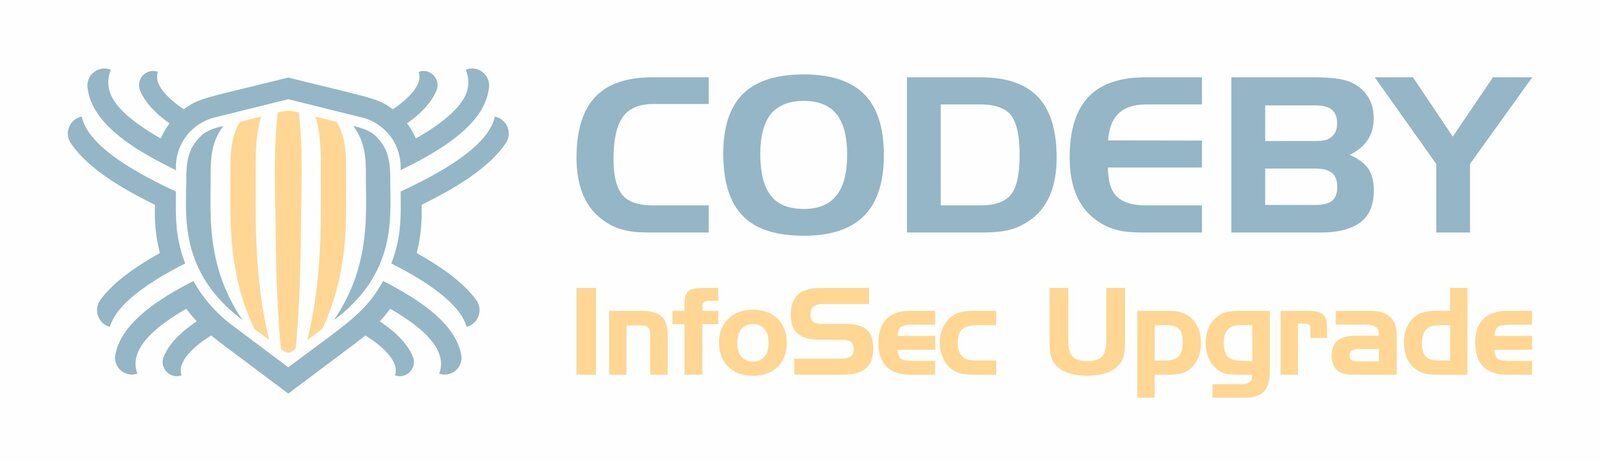 Codeby InfiSec Upgrade.jpg